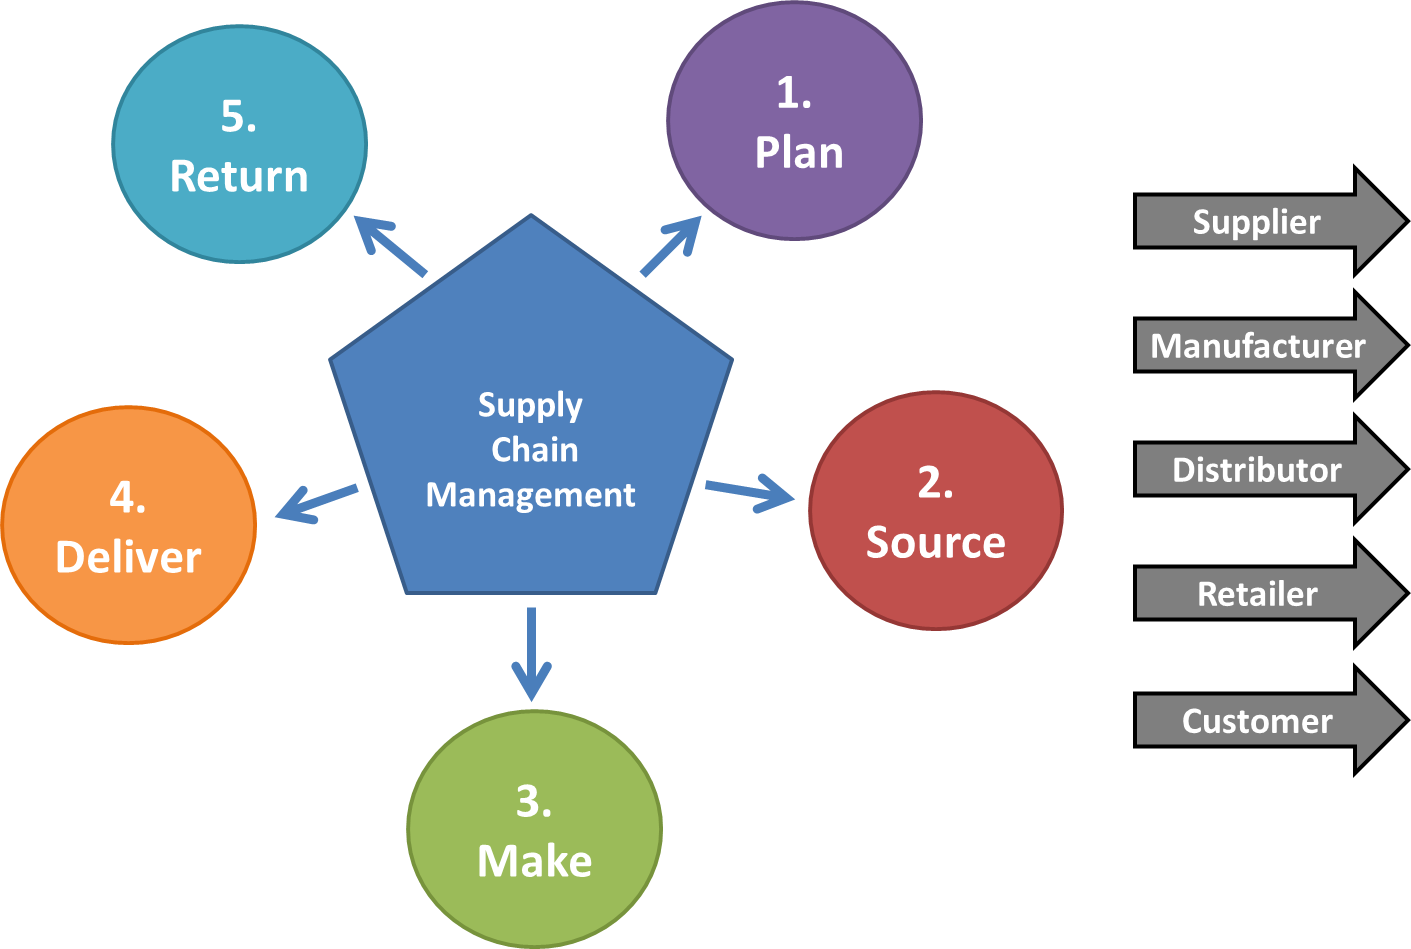 Return вернуть. SCM В логистике. Supply Chain Management. Логистика и управление цепями поставок Logistics and Supply Chain Management. Supply Chain картинки.